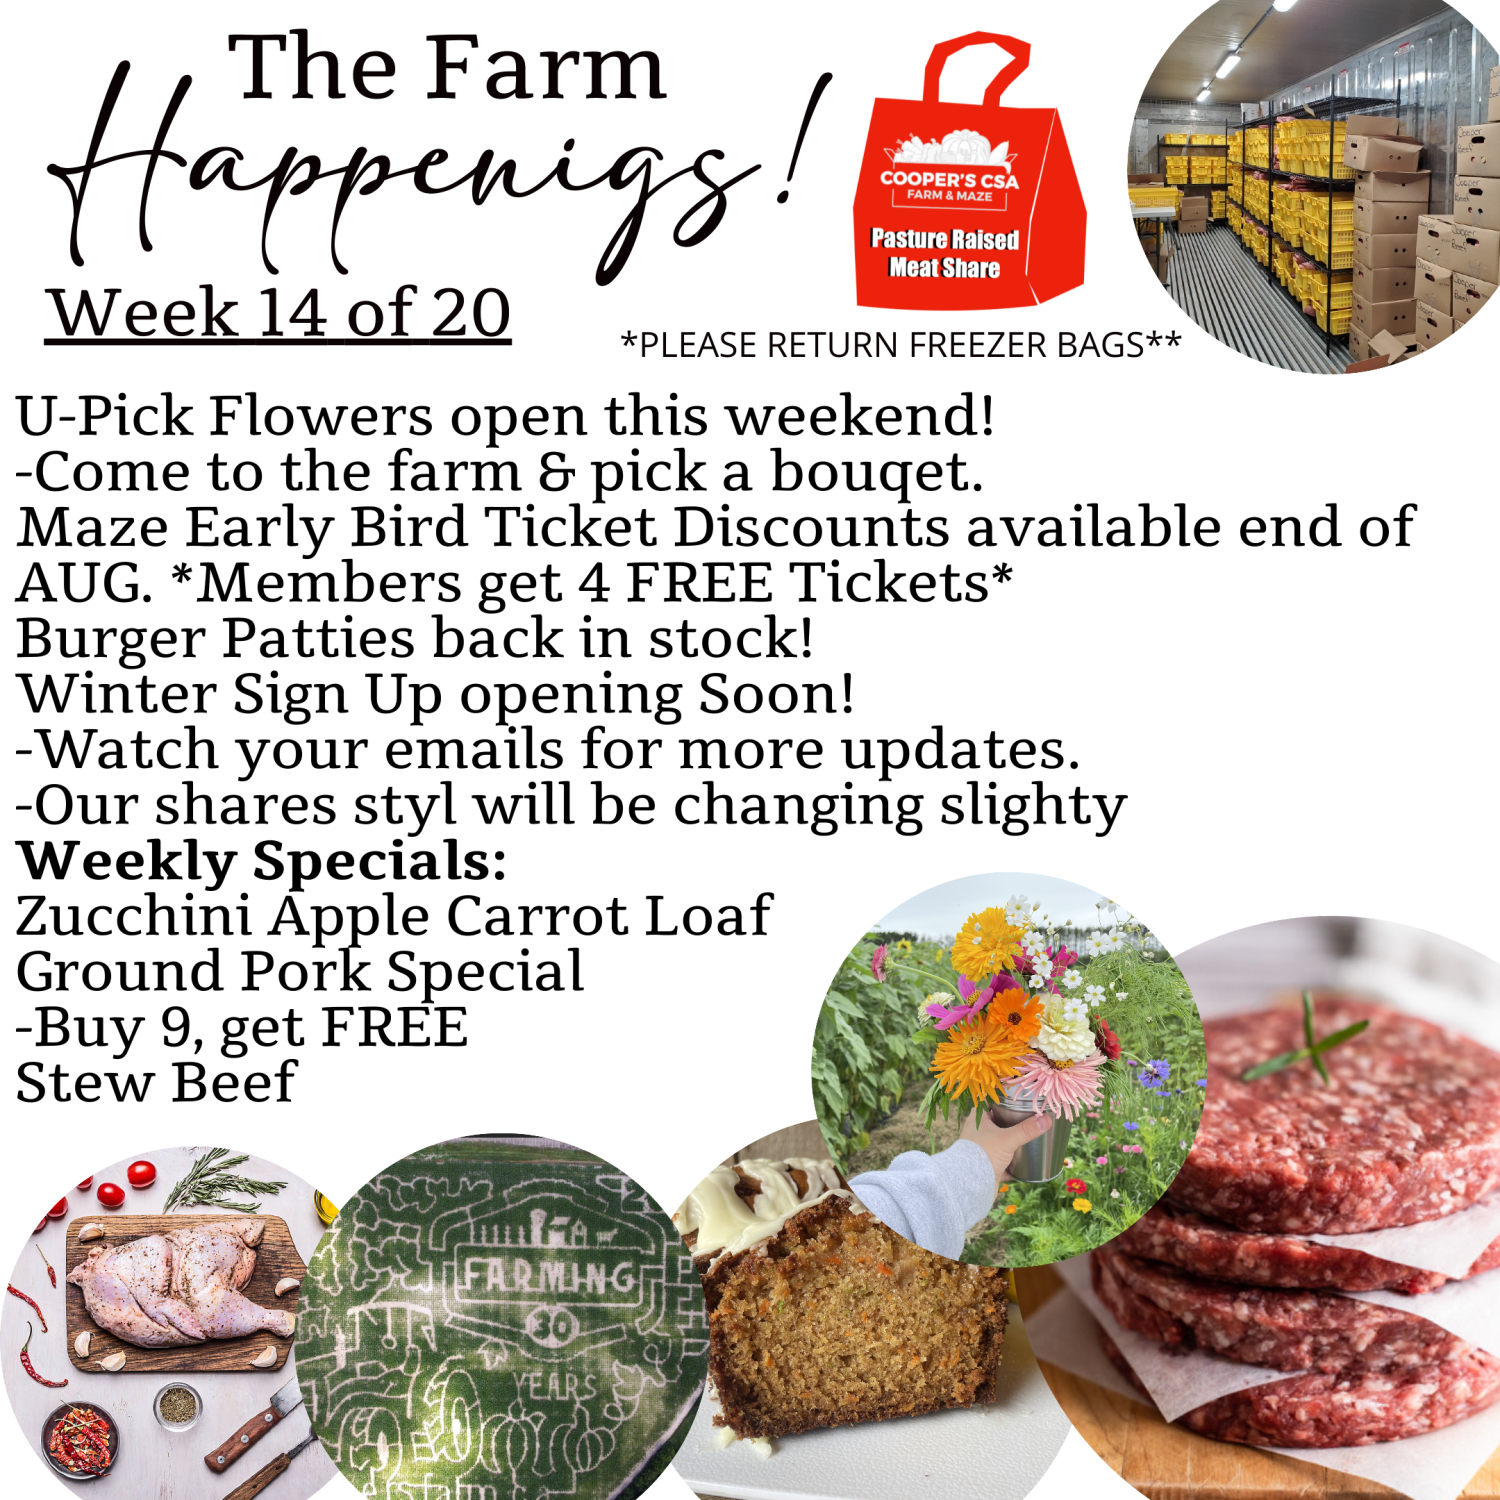 Next Happening: "Pasture Meat Shares"-Coopers CSA Farm Farm Happenings Week 14